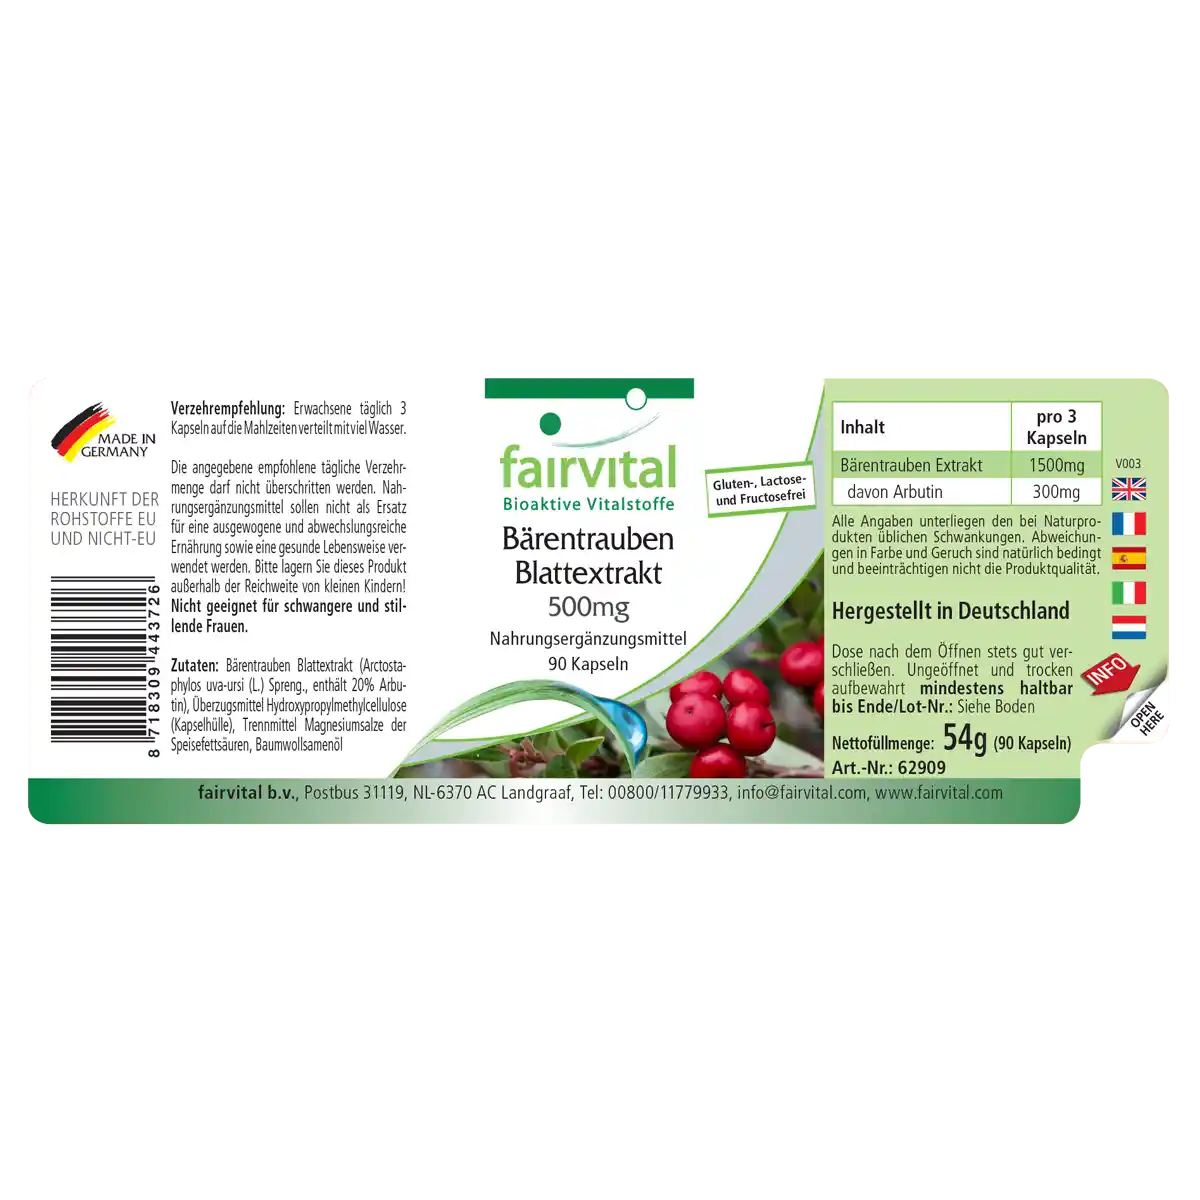 Uva Ursi Bearberry leaf extract 500mg - 90 capsules